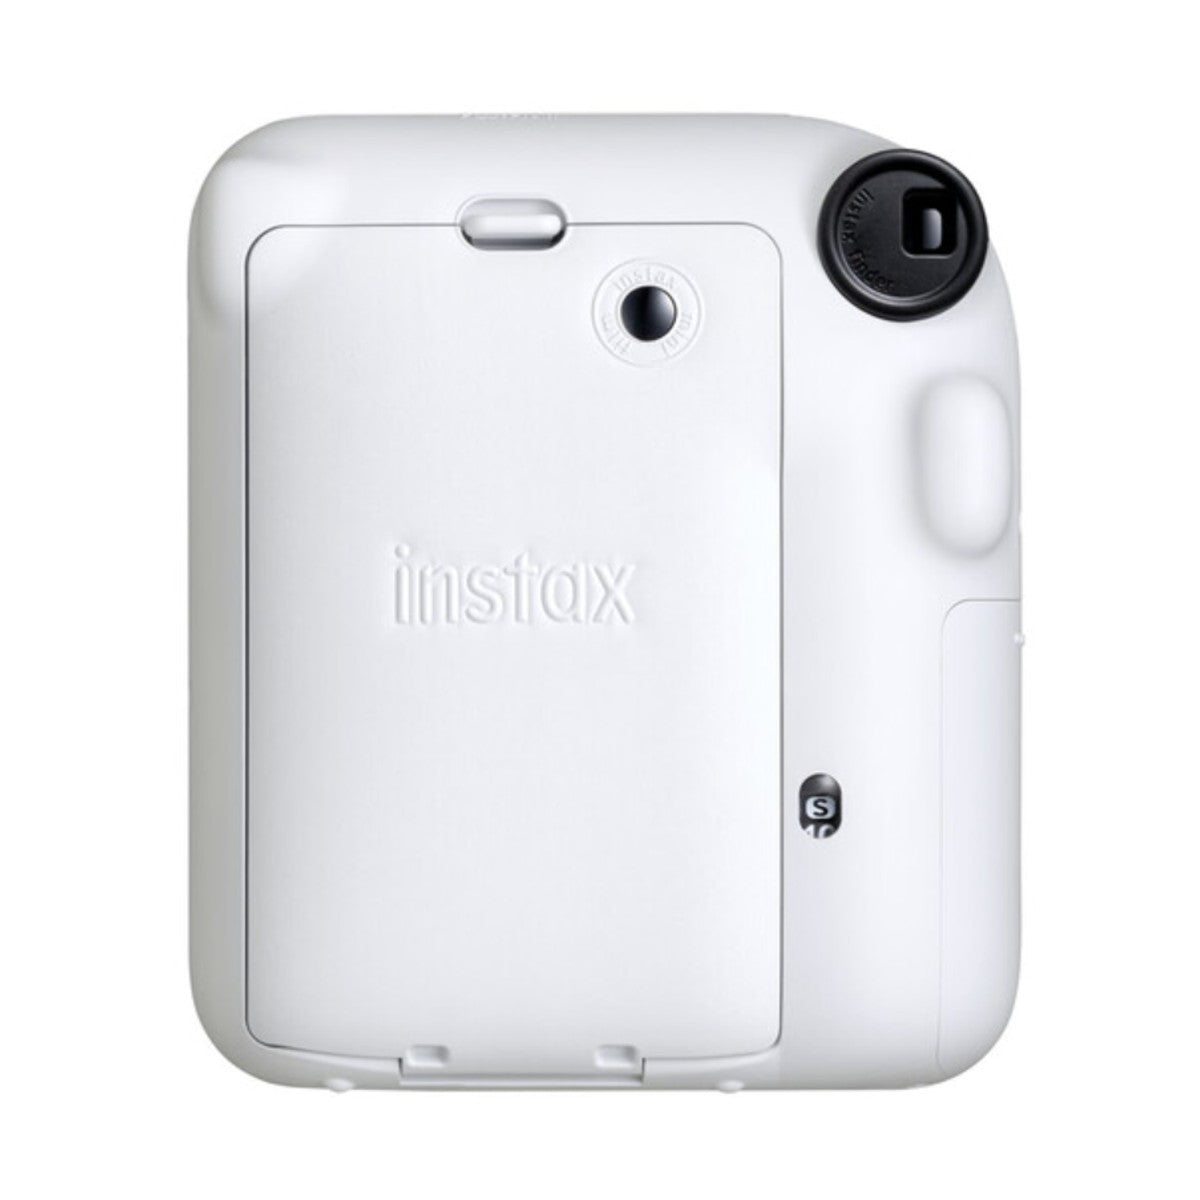 Fujifilm Instax Link Wide Smartphone Printer, Ash White 16719550